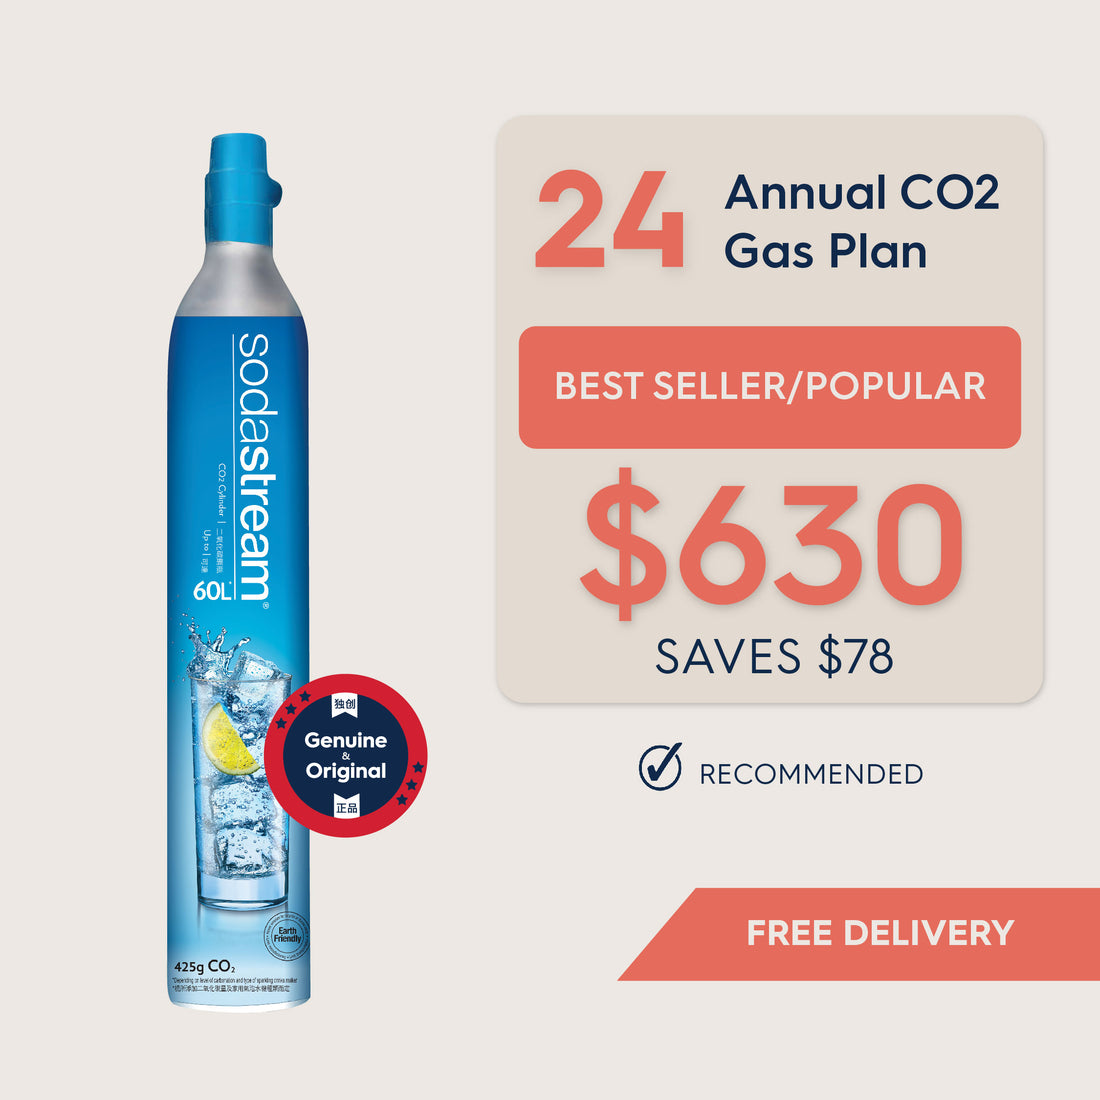 SodaStream 24 CO2 Gas Cylinder Annual Saver Plan - Savings $78